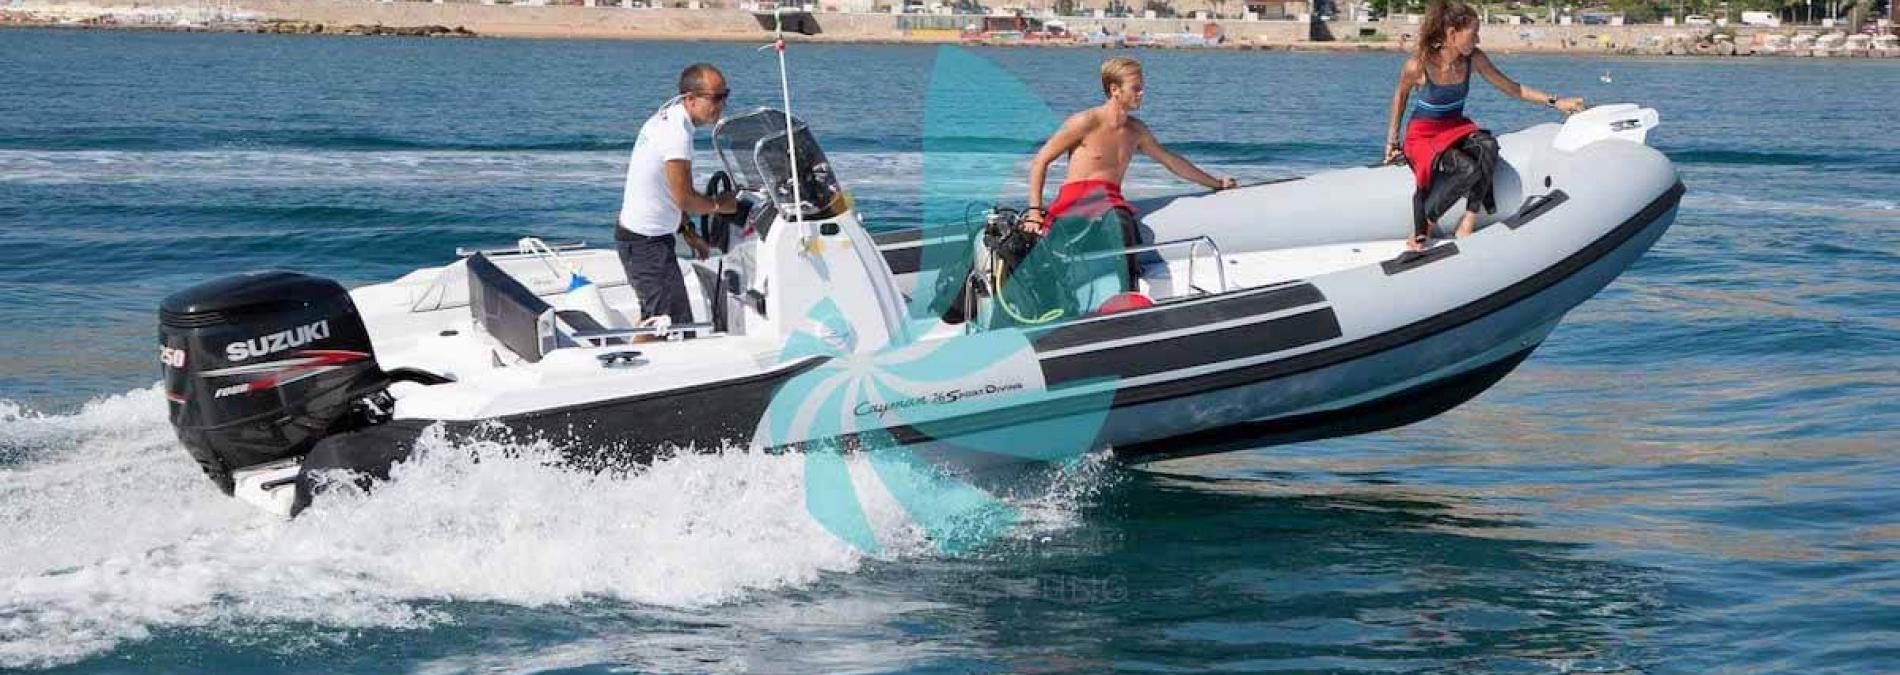 RANIERI Cayman 26 Sport Diving Luxury RIB